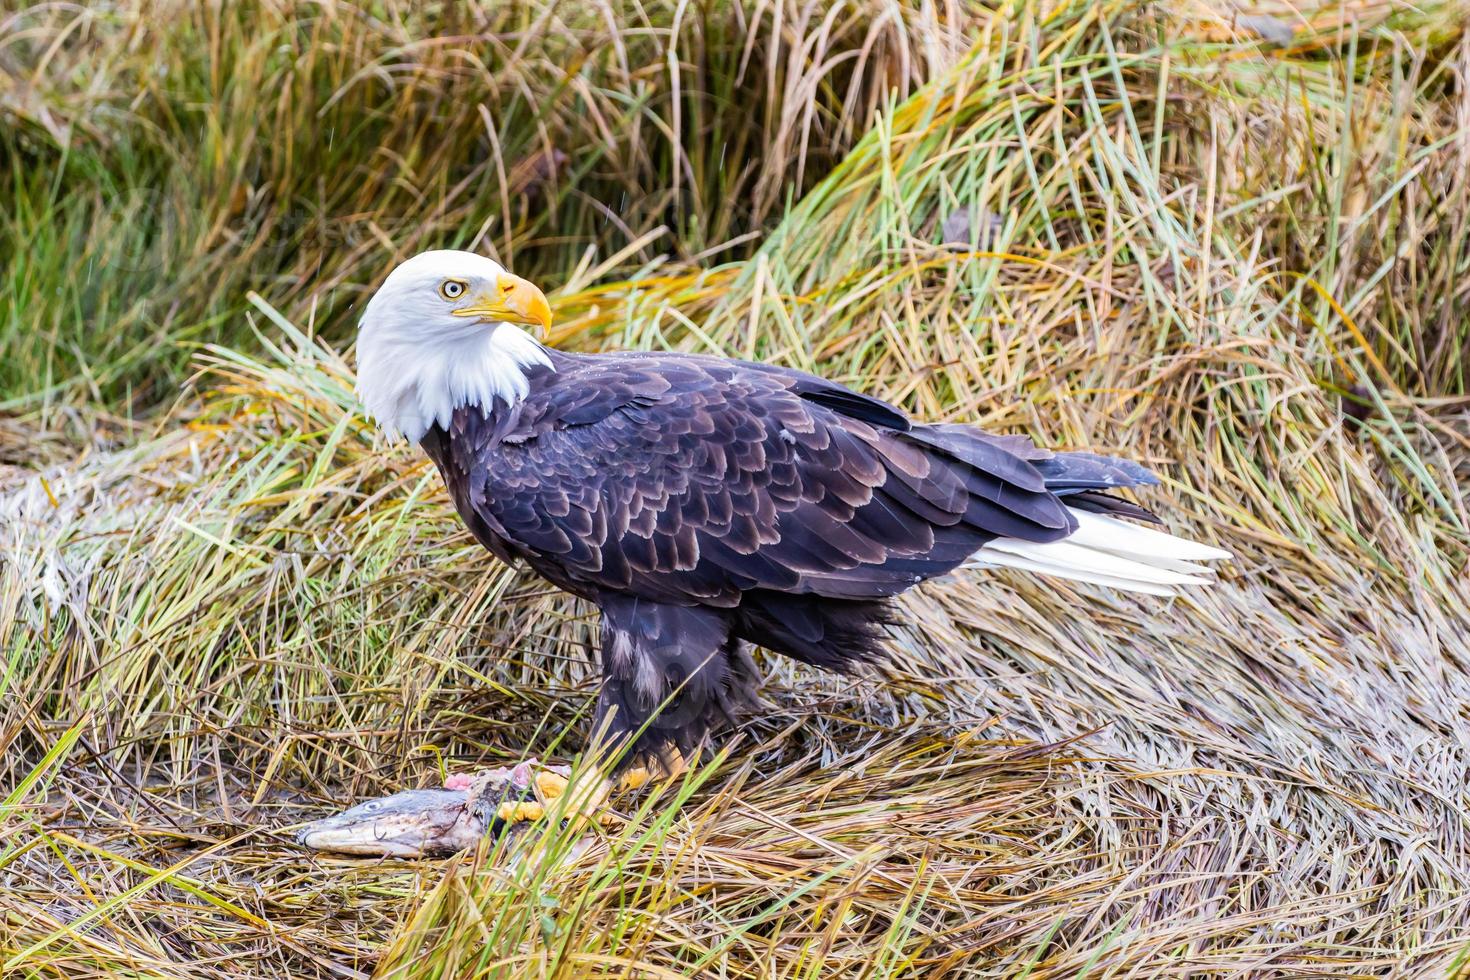 A bald eagle eating salmon on a river bank photo